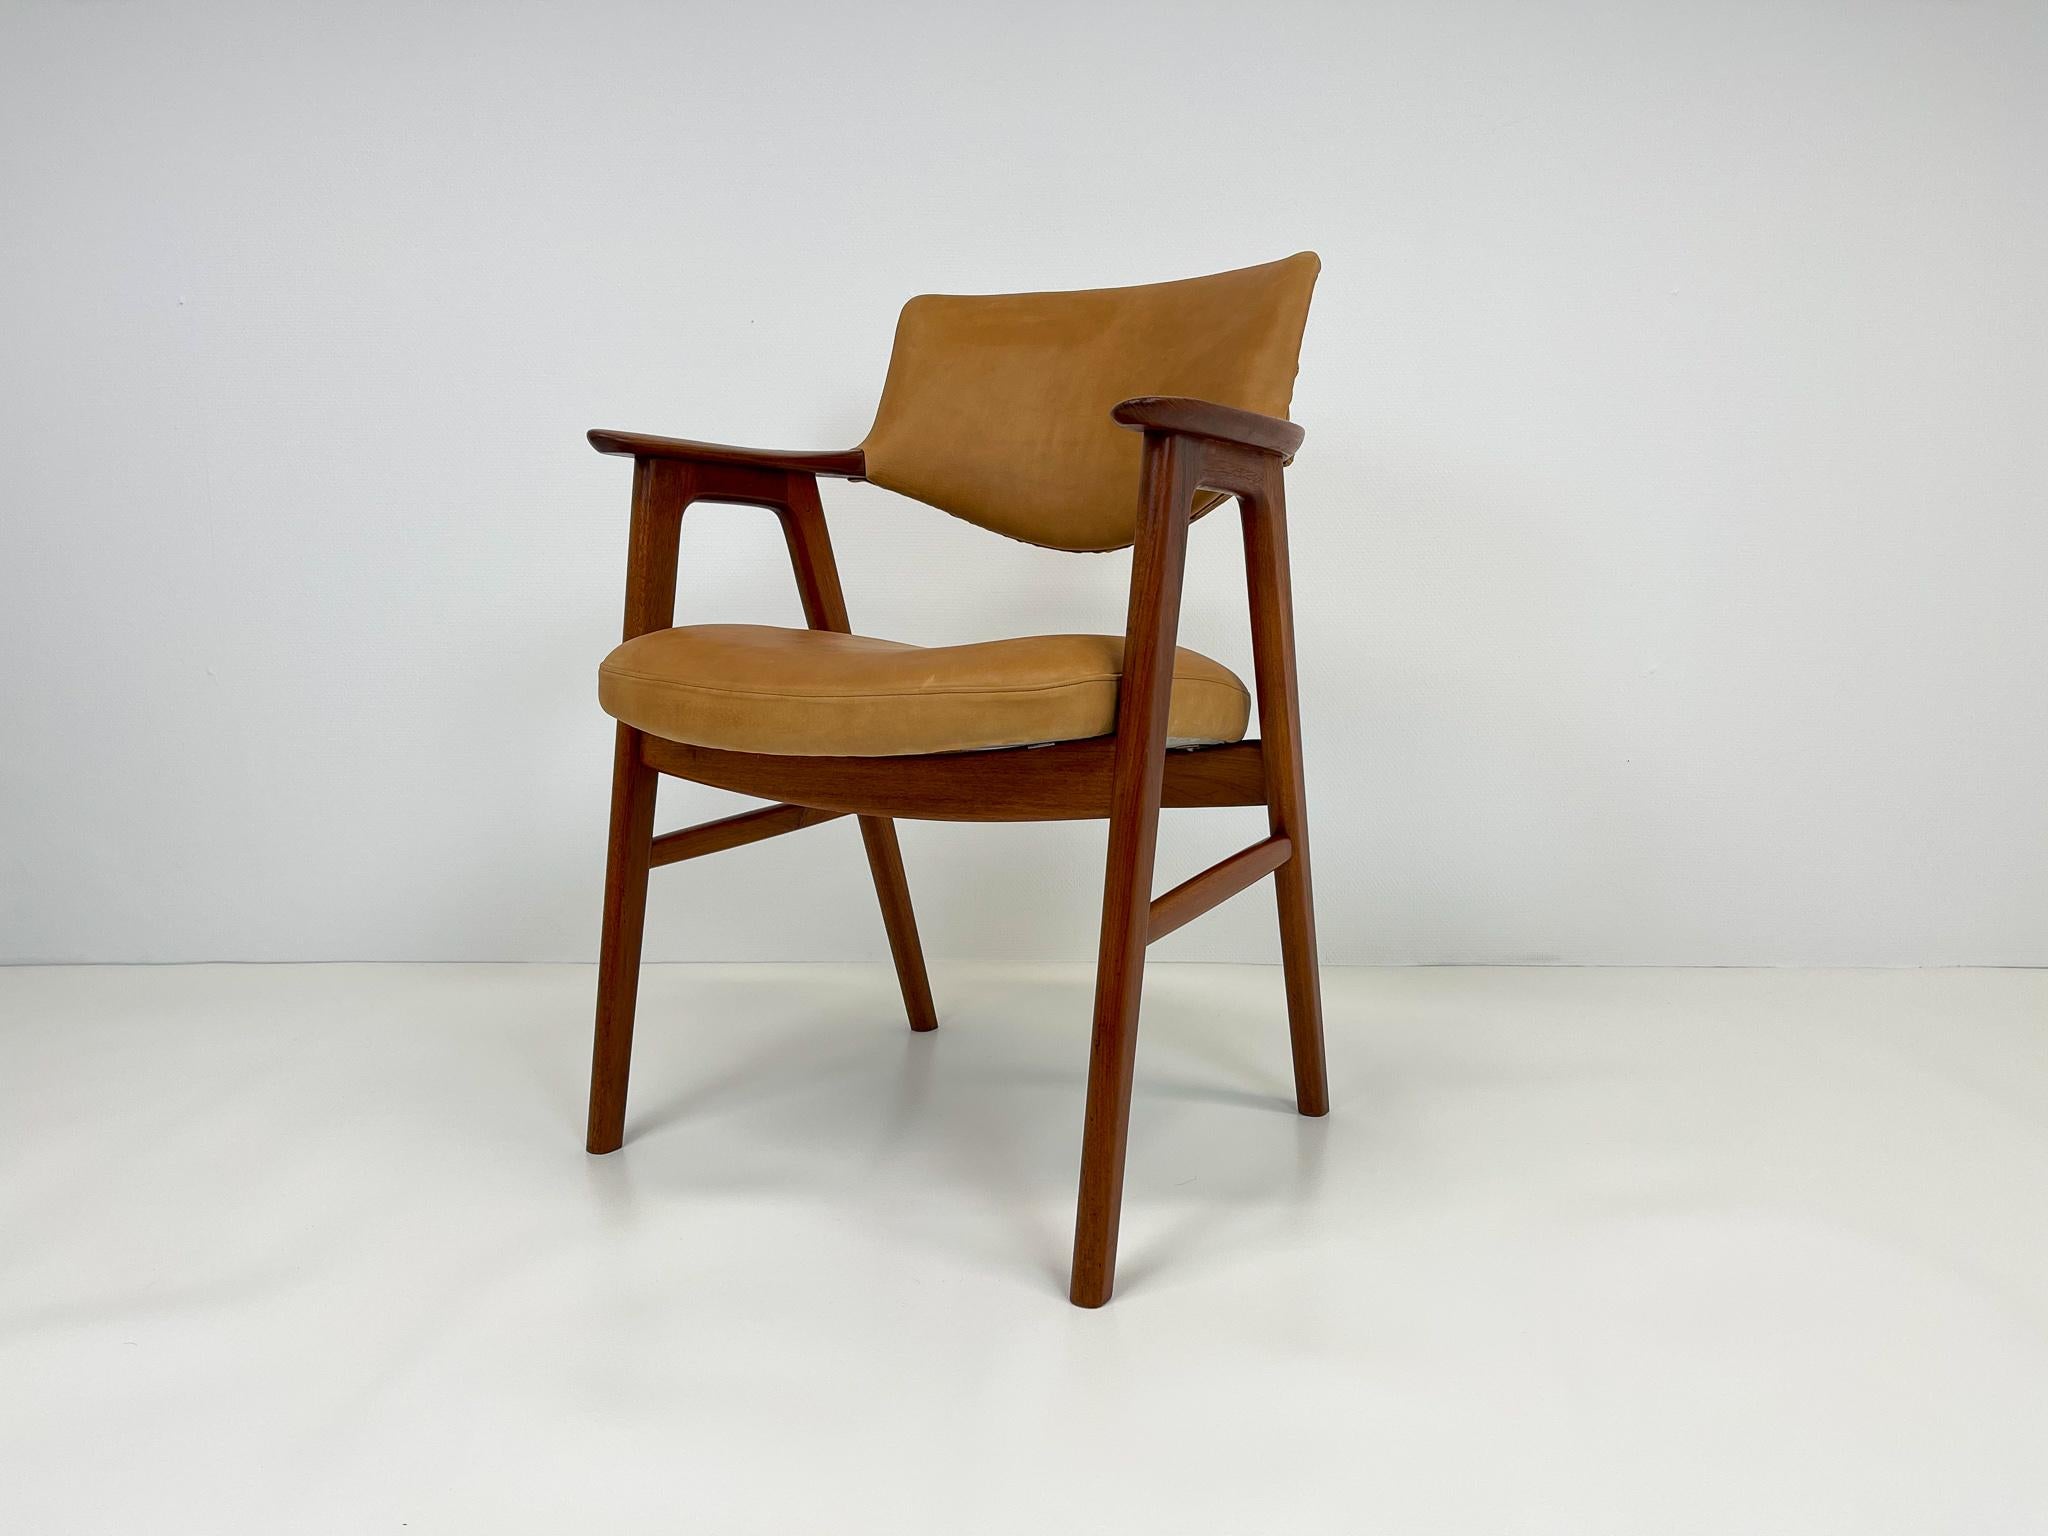 Wonderful Erik Kirkegaard Danish desk chair in teak designed for Høng Stolefabrik in 1956. 
New brown high quality leather upholstered.

Very good vintage design with all new upholstery in leather. 

Dimesndions: Height: 32.6 in. (83 cm )width: